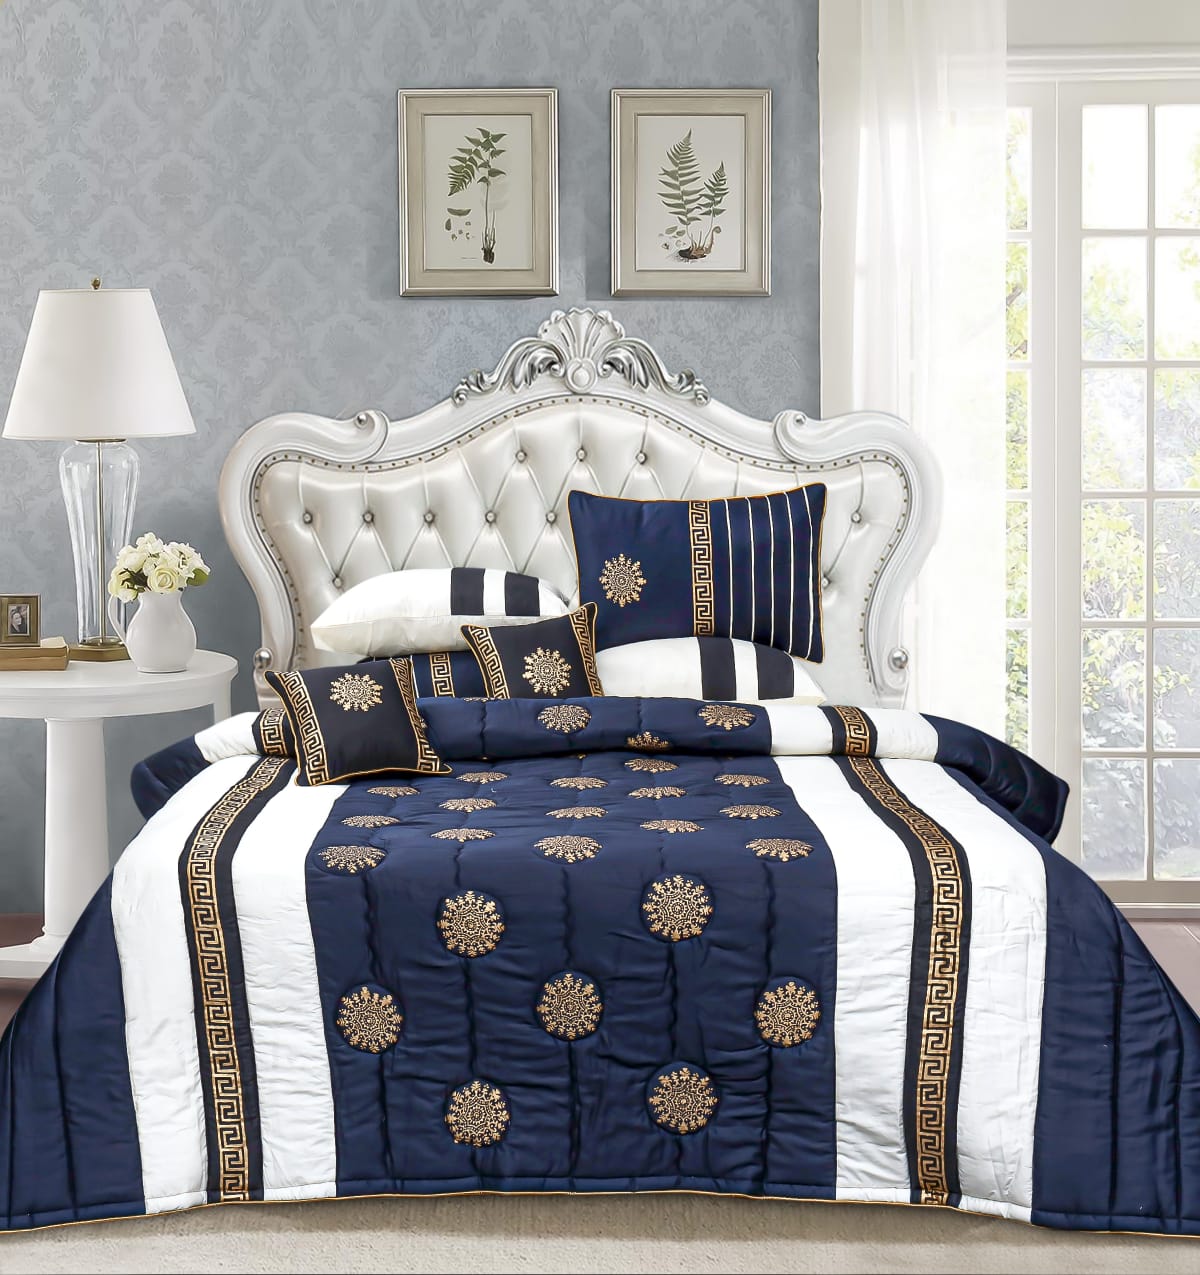 8 Pcs Bridal Bed Sheet Comforter Set Cotton Sateen Block Printed – Baroque Blue